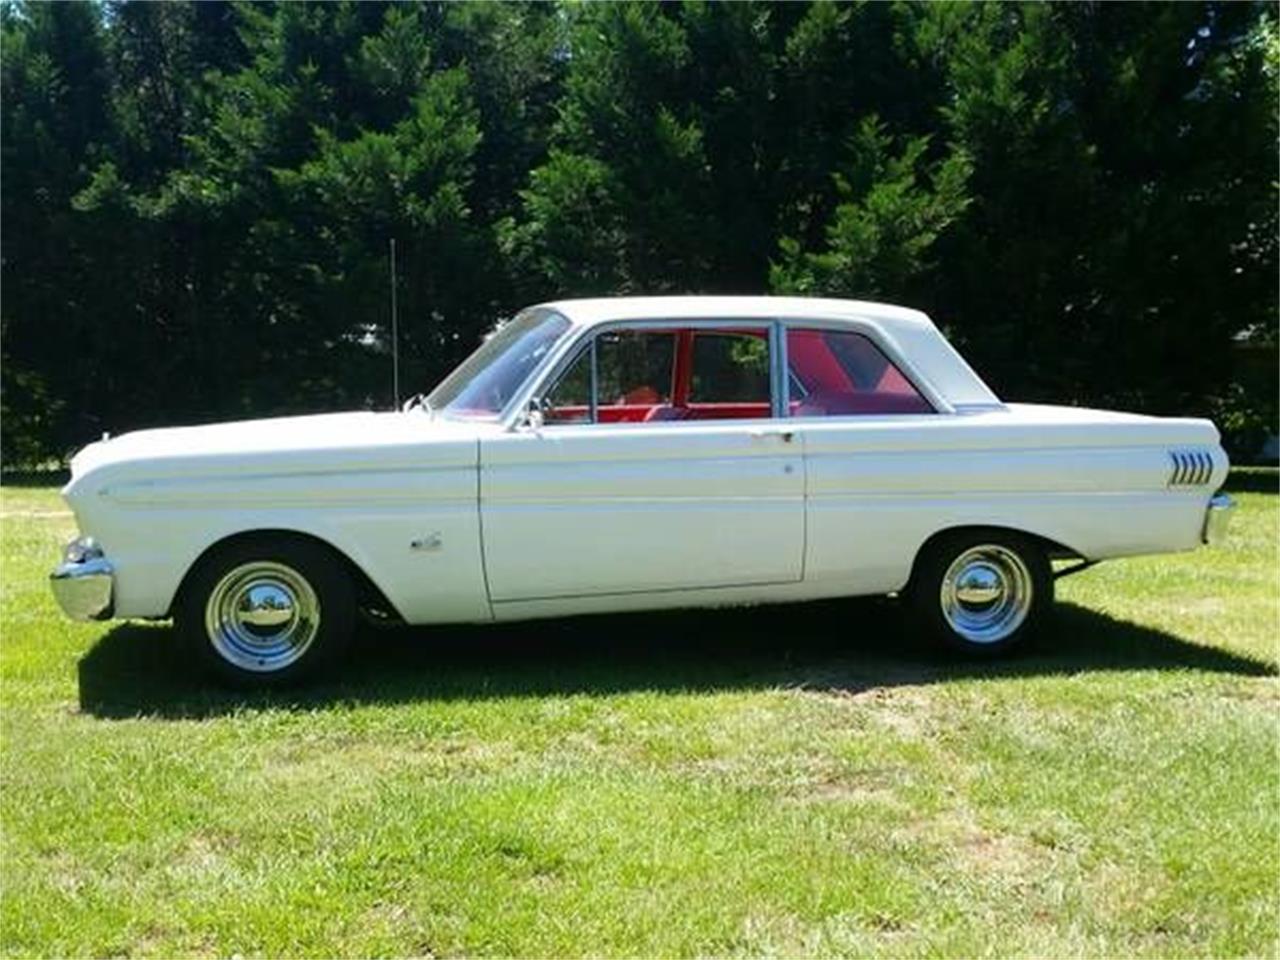 1964 Ford Falcon for Sale | ClassicCars.com | CC-1120110